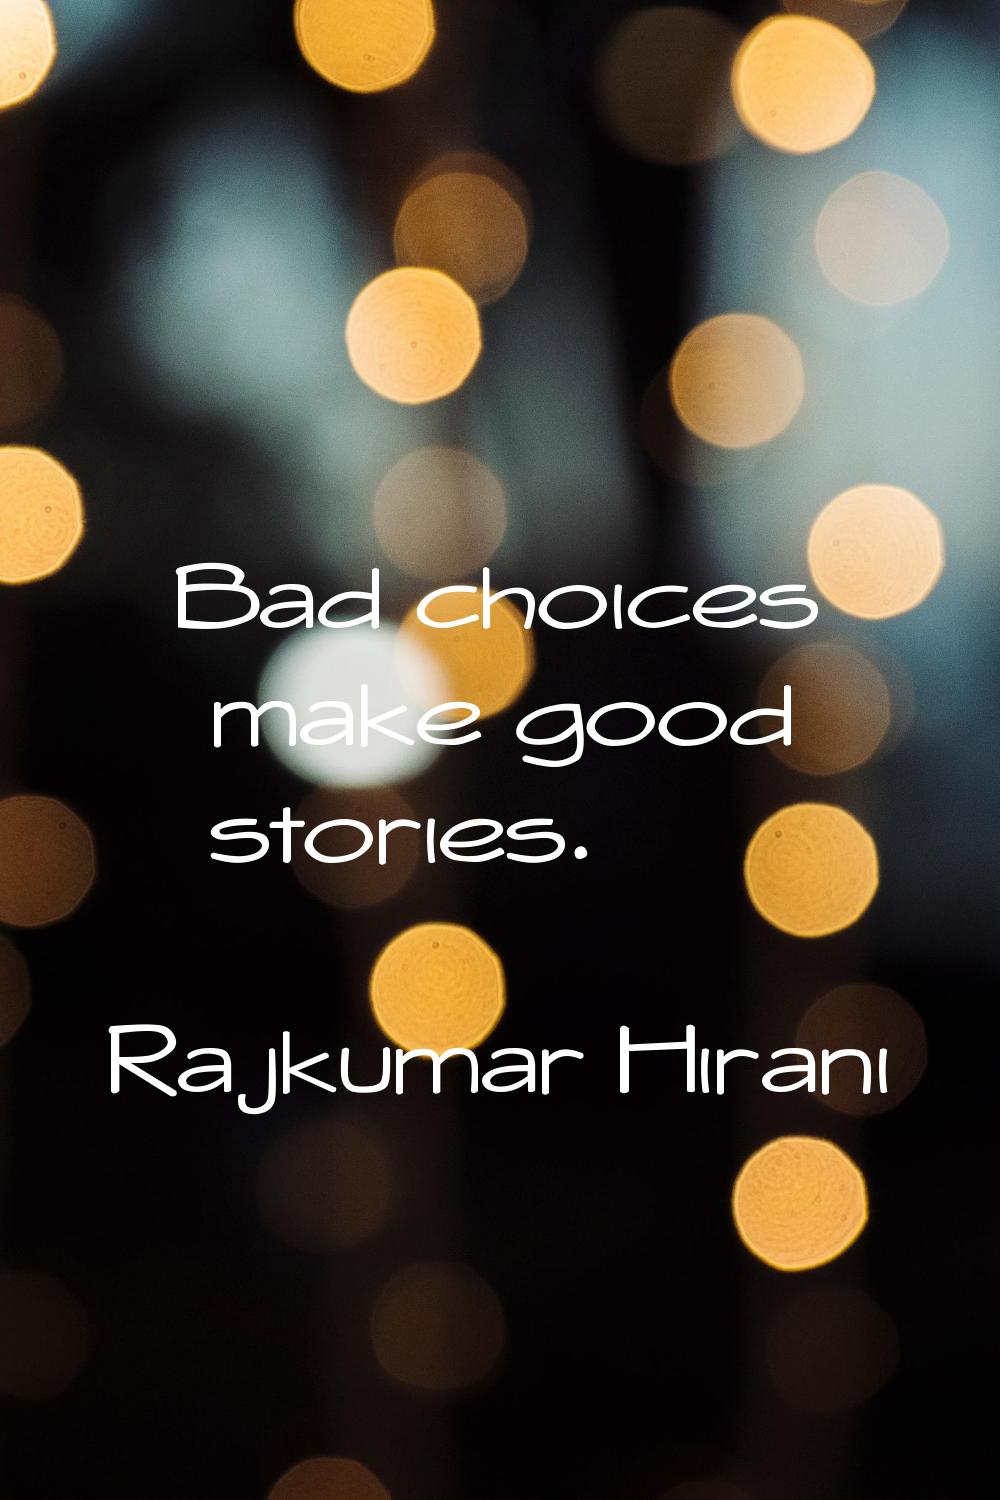 Bad choices make good stories.